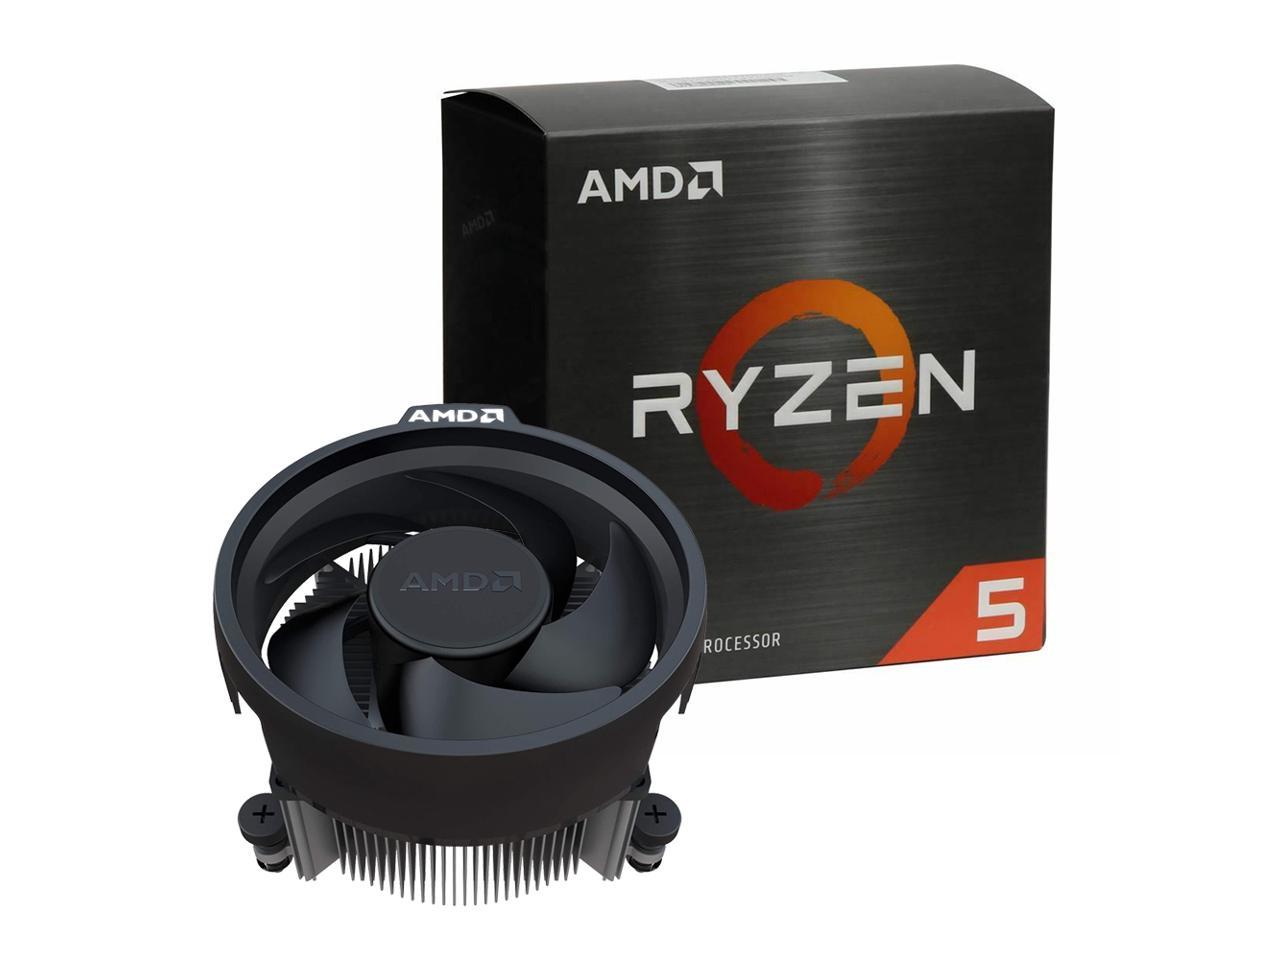 AMD Ryzen 5 5600X 6-Core 3.7 GHz AM4 CPU Processor - Newegg.com